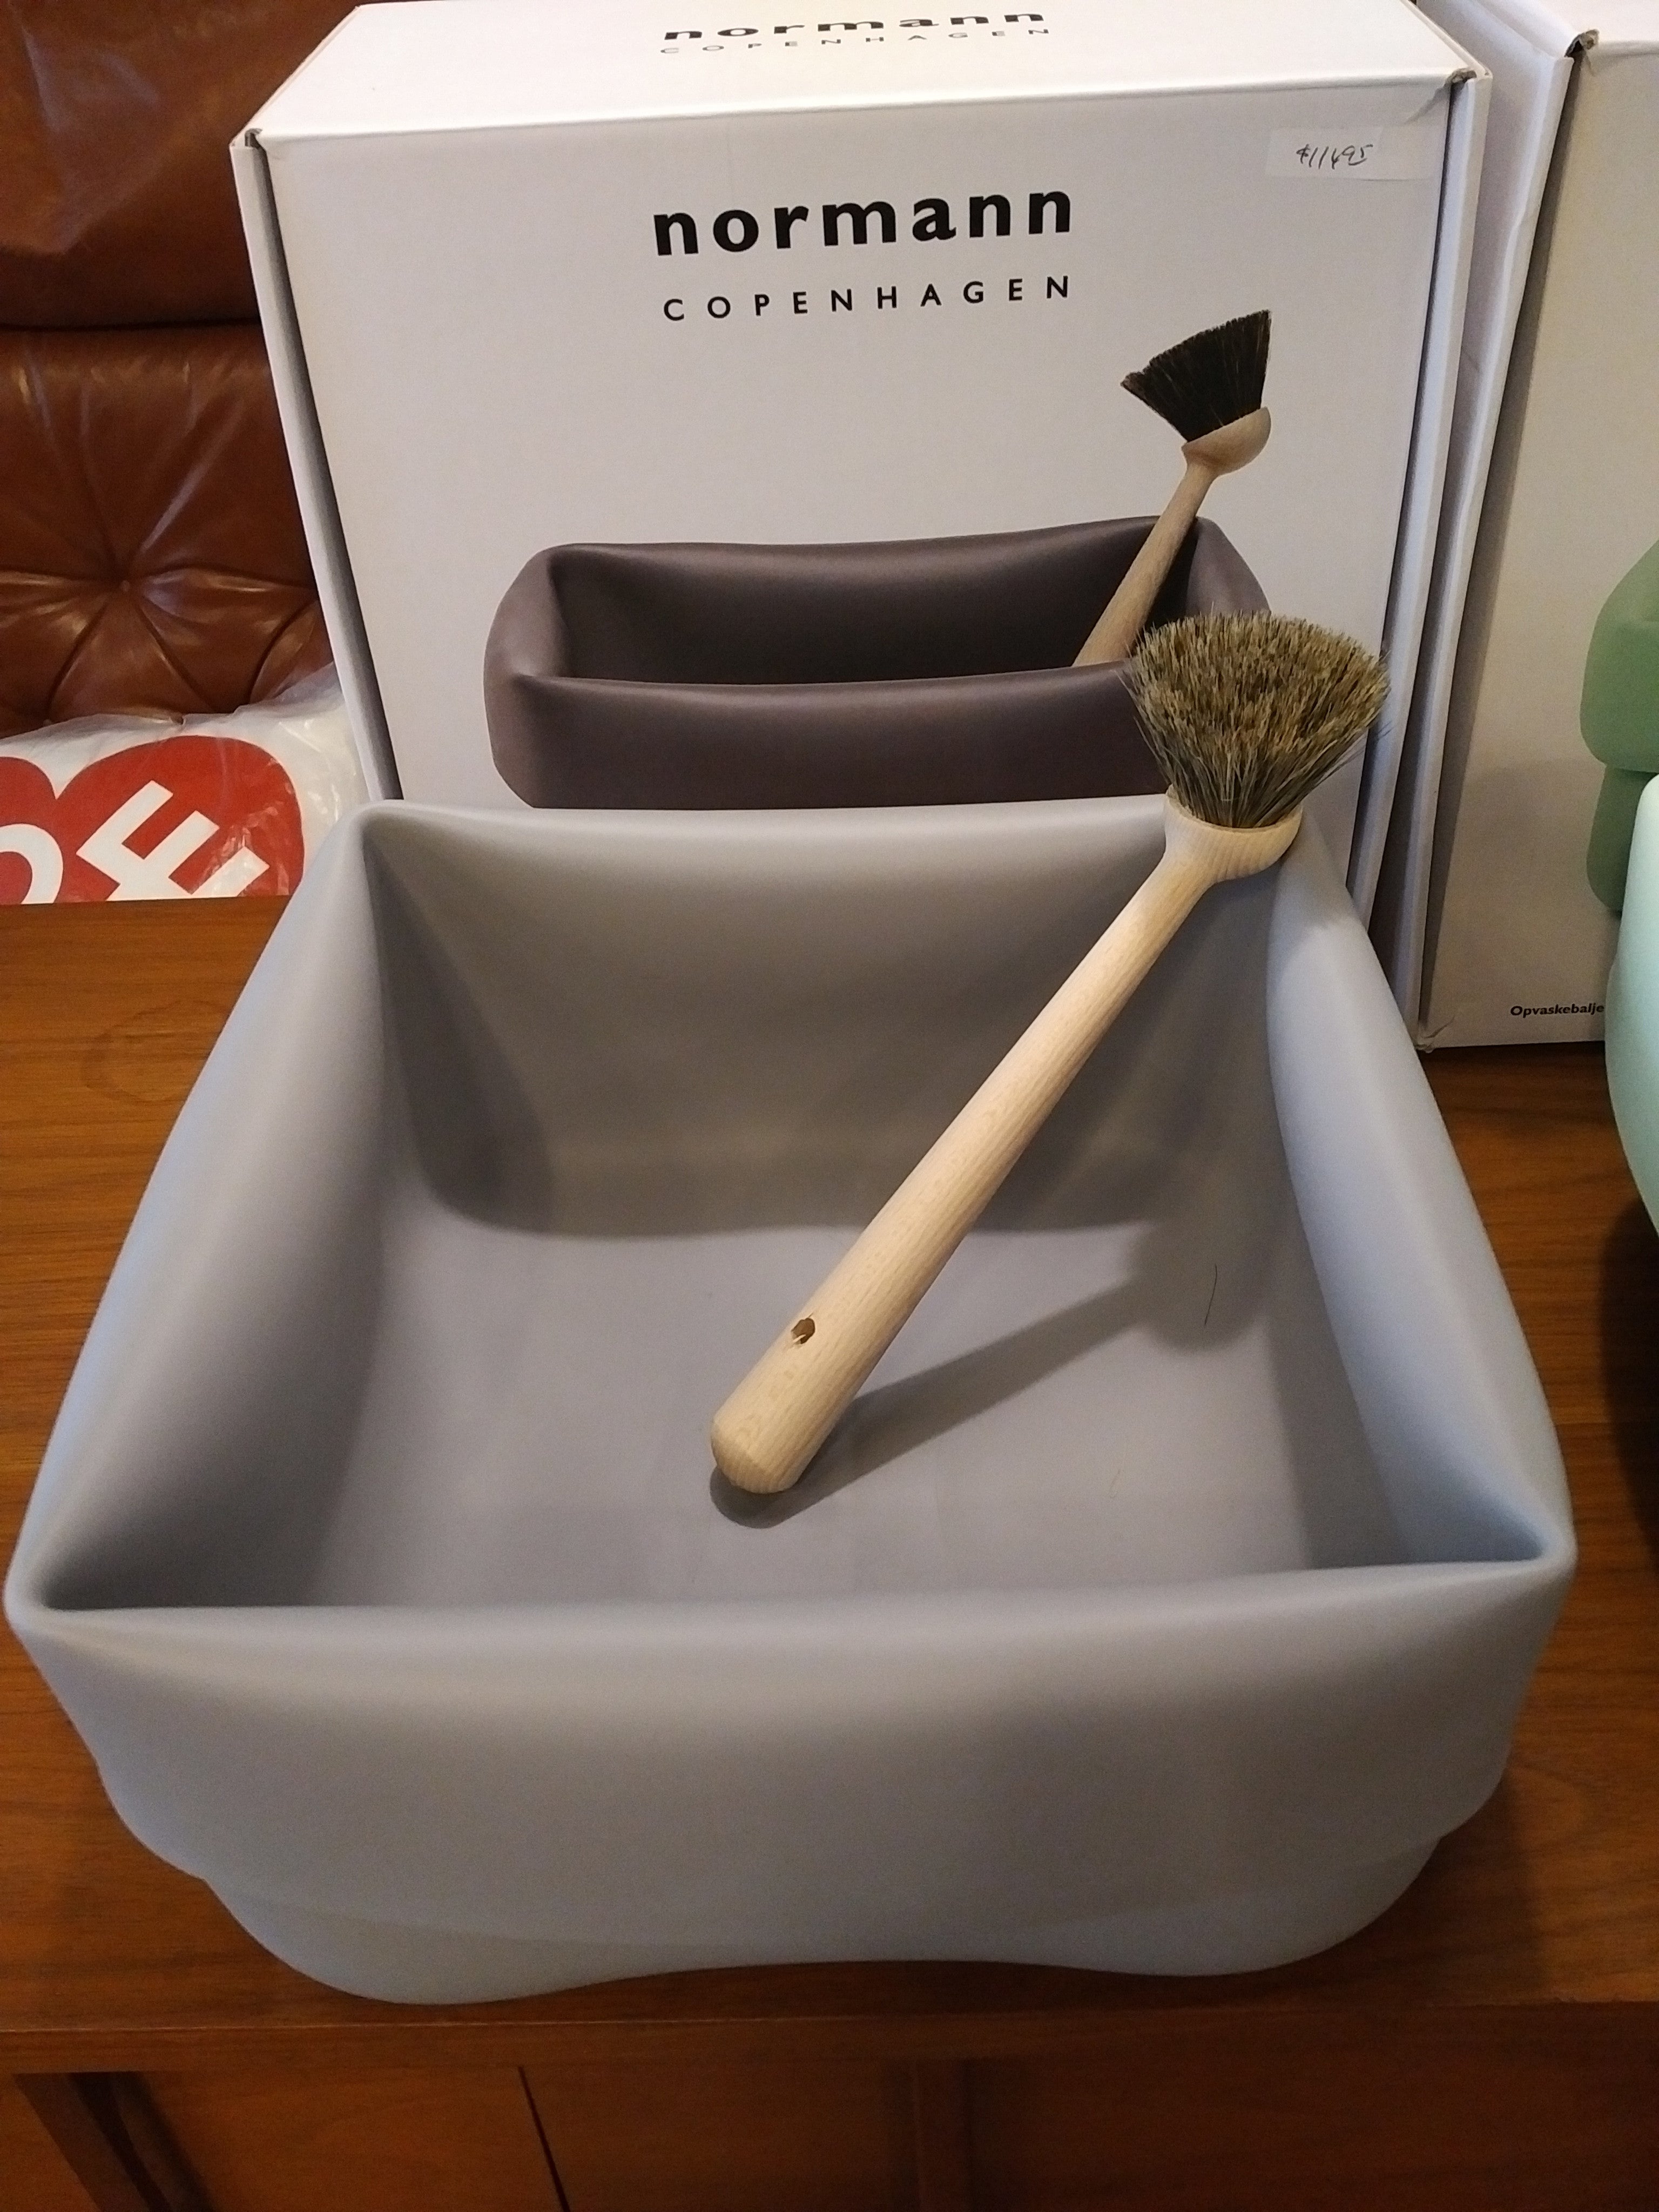 Normann Copenhagen washing - up bowl and brush